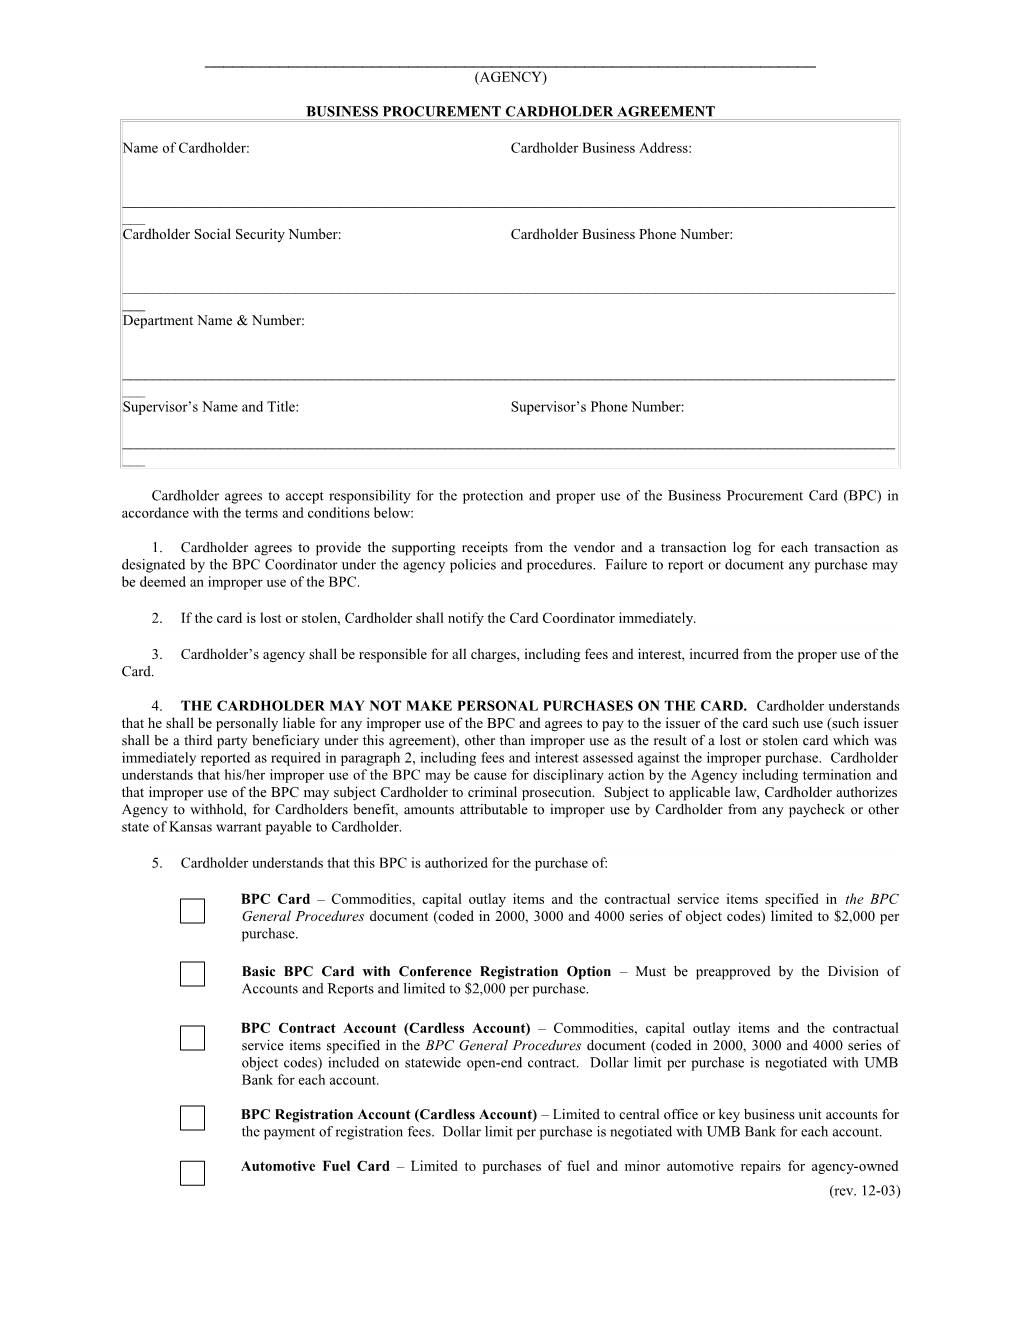 Business Procurement Cardholder Agreement